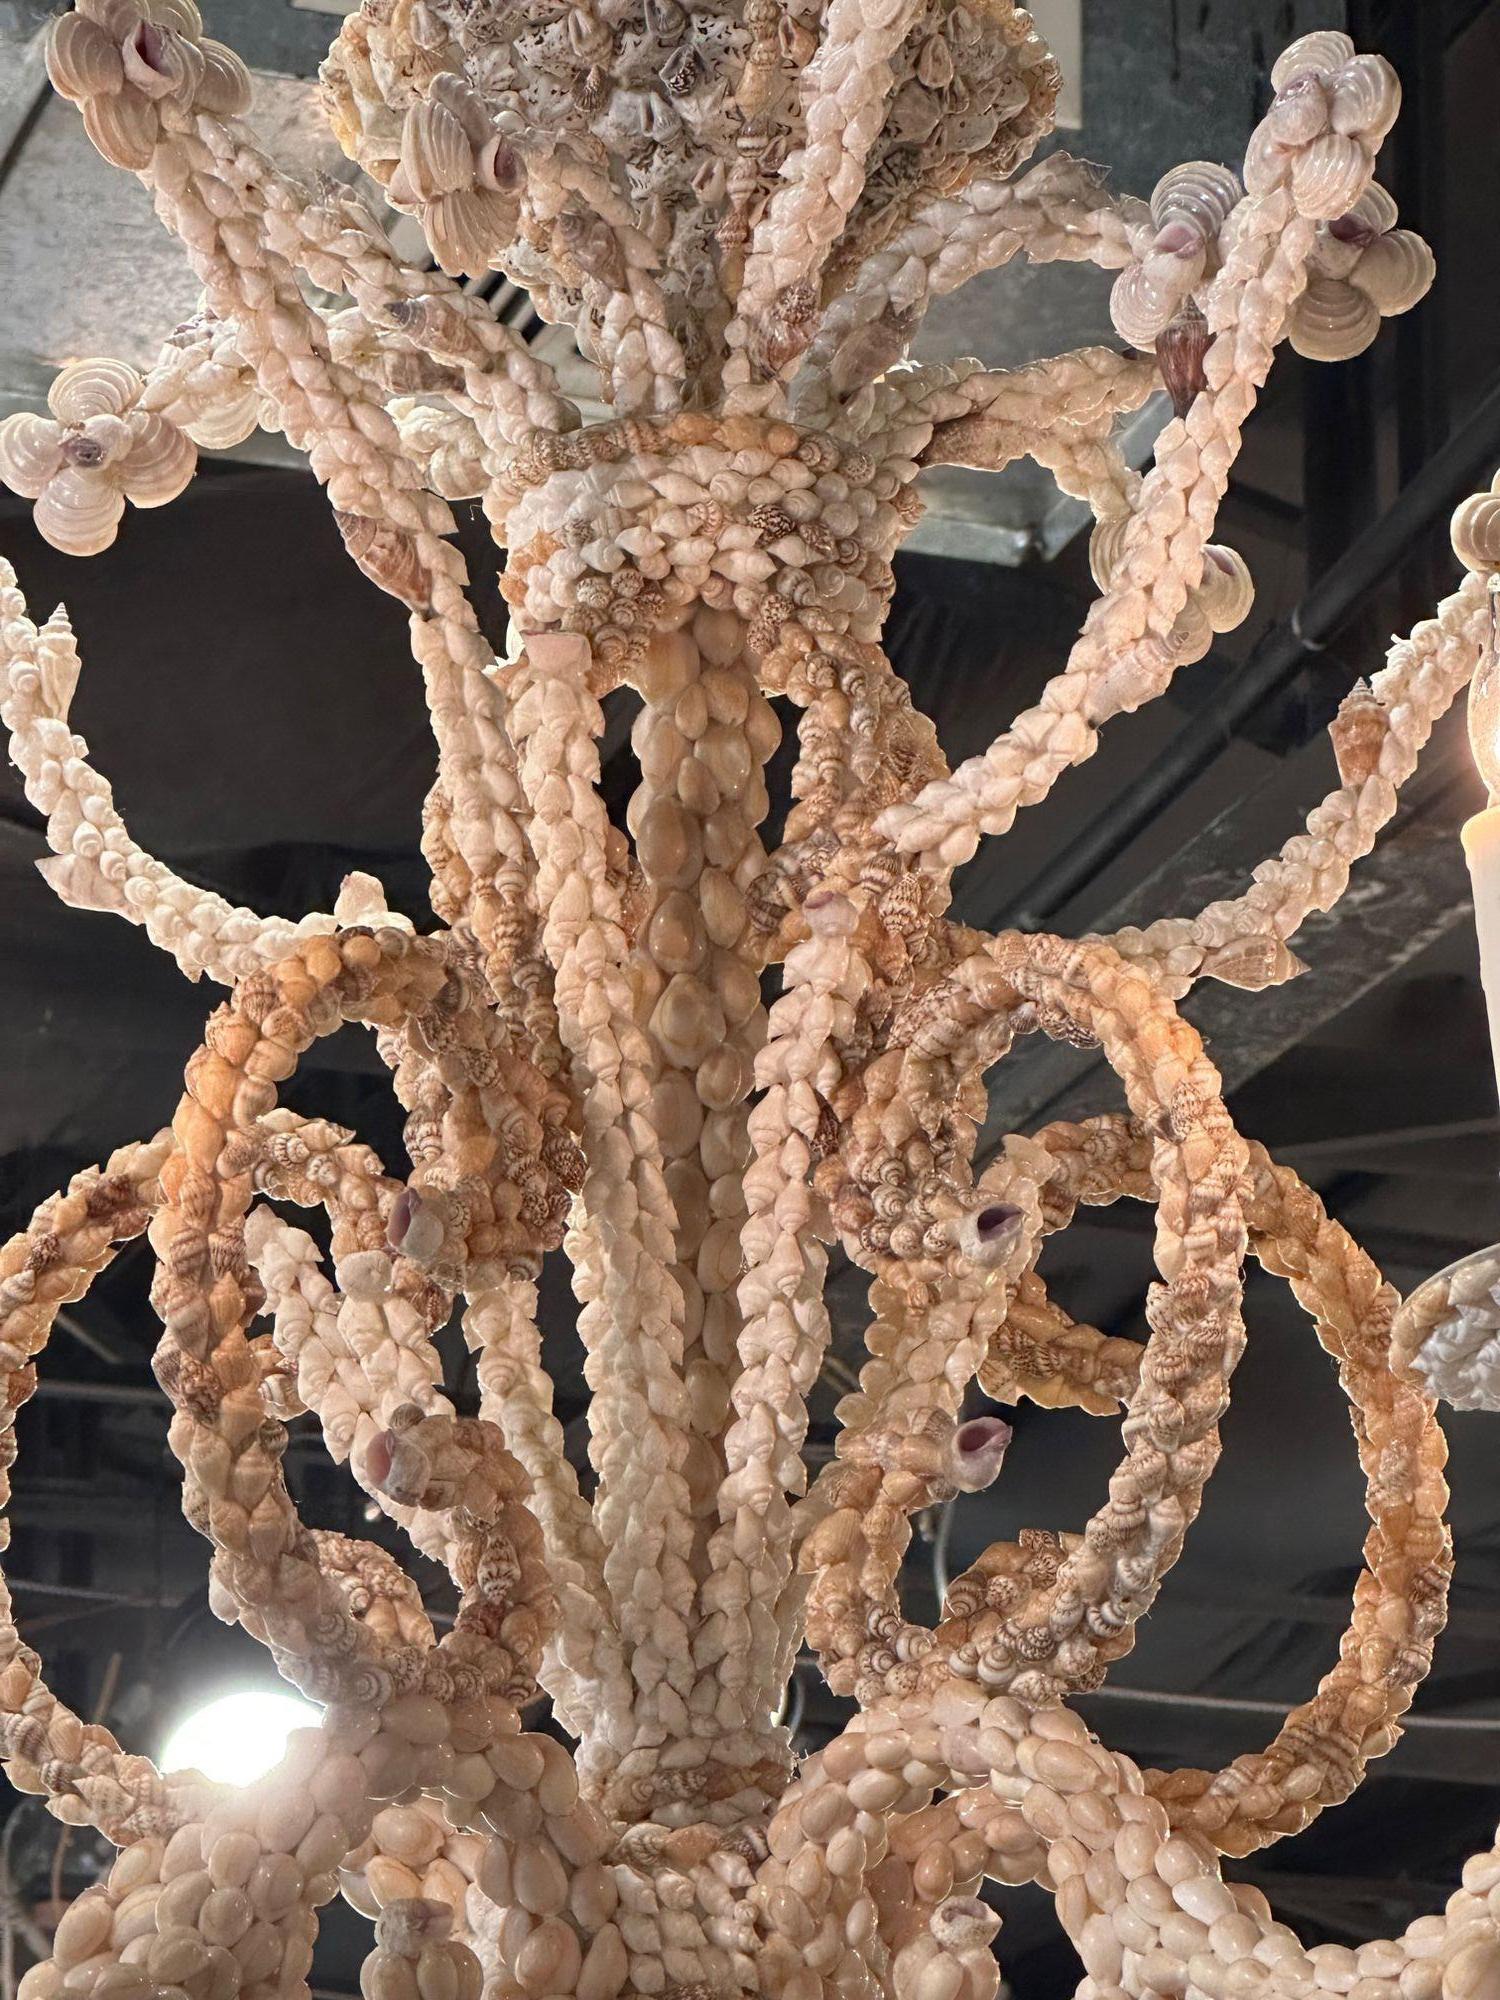 vintage shell chandelier